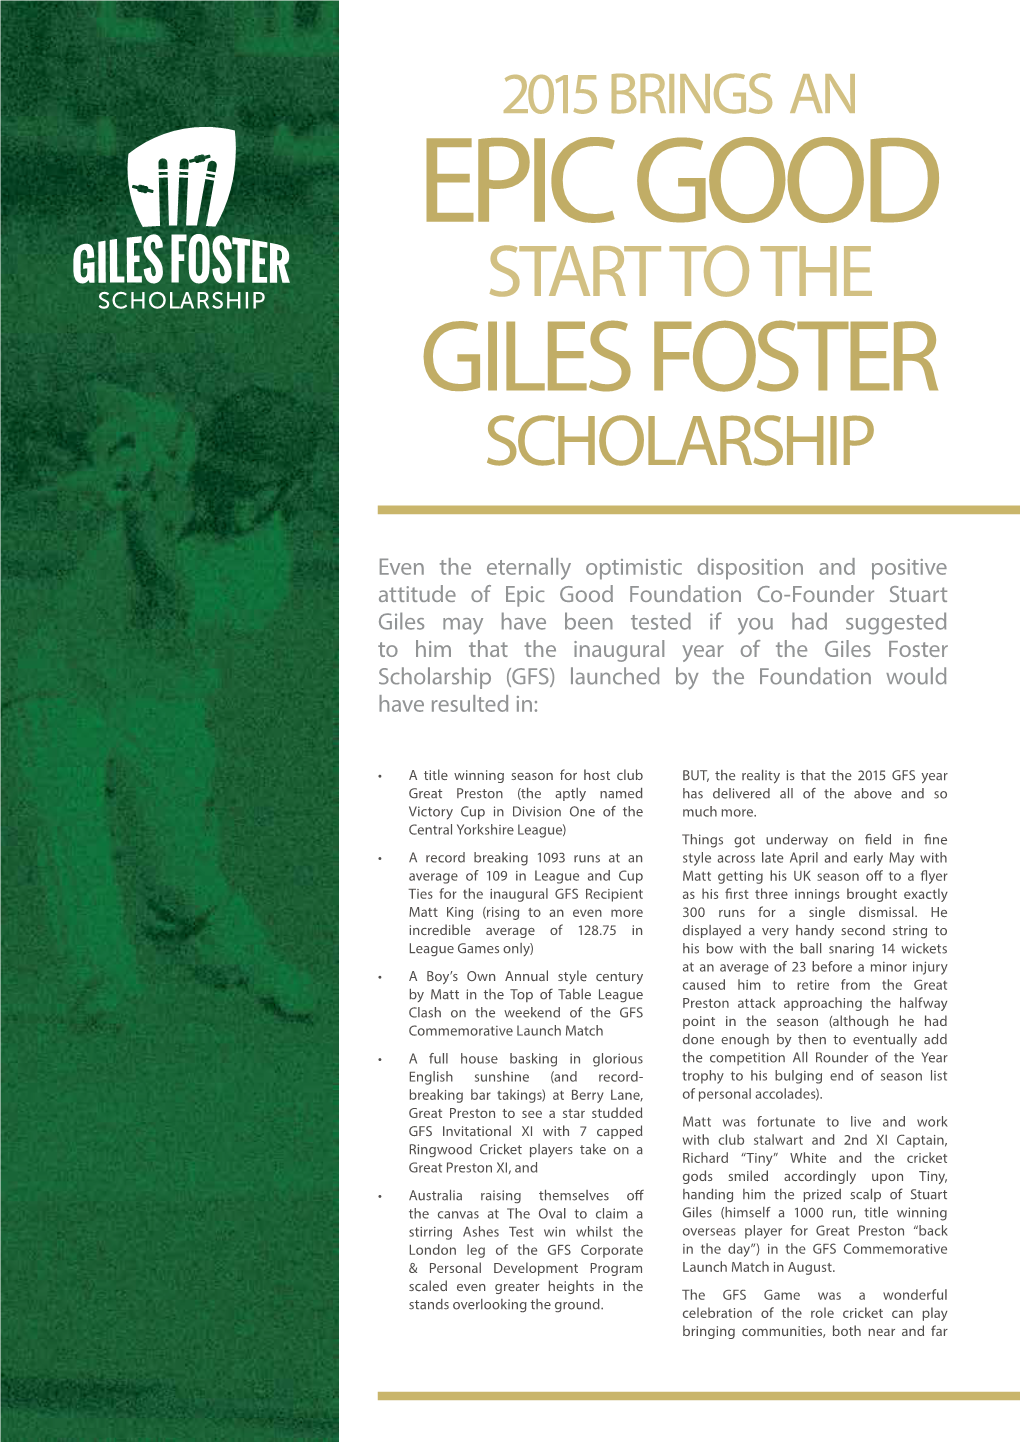 Giles Foster Scholarship